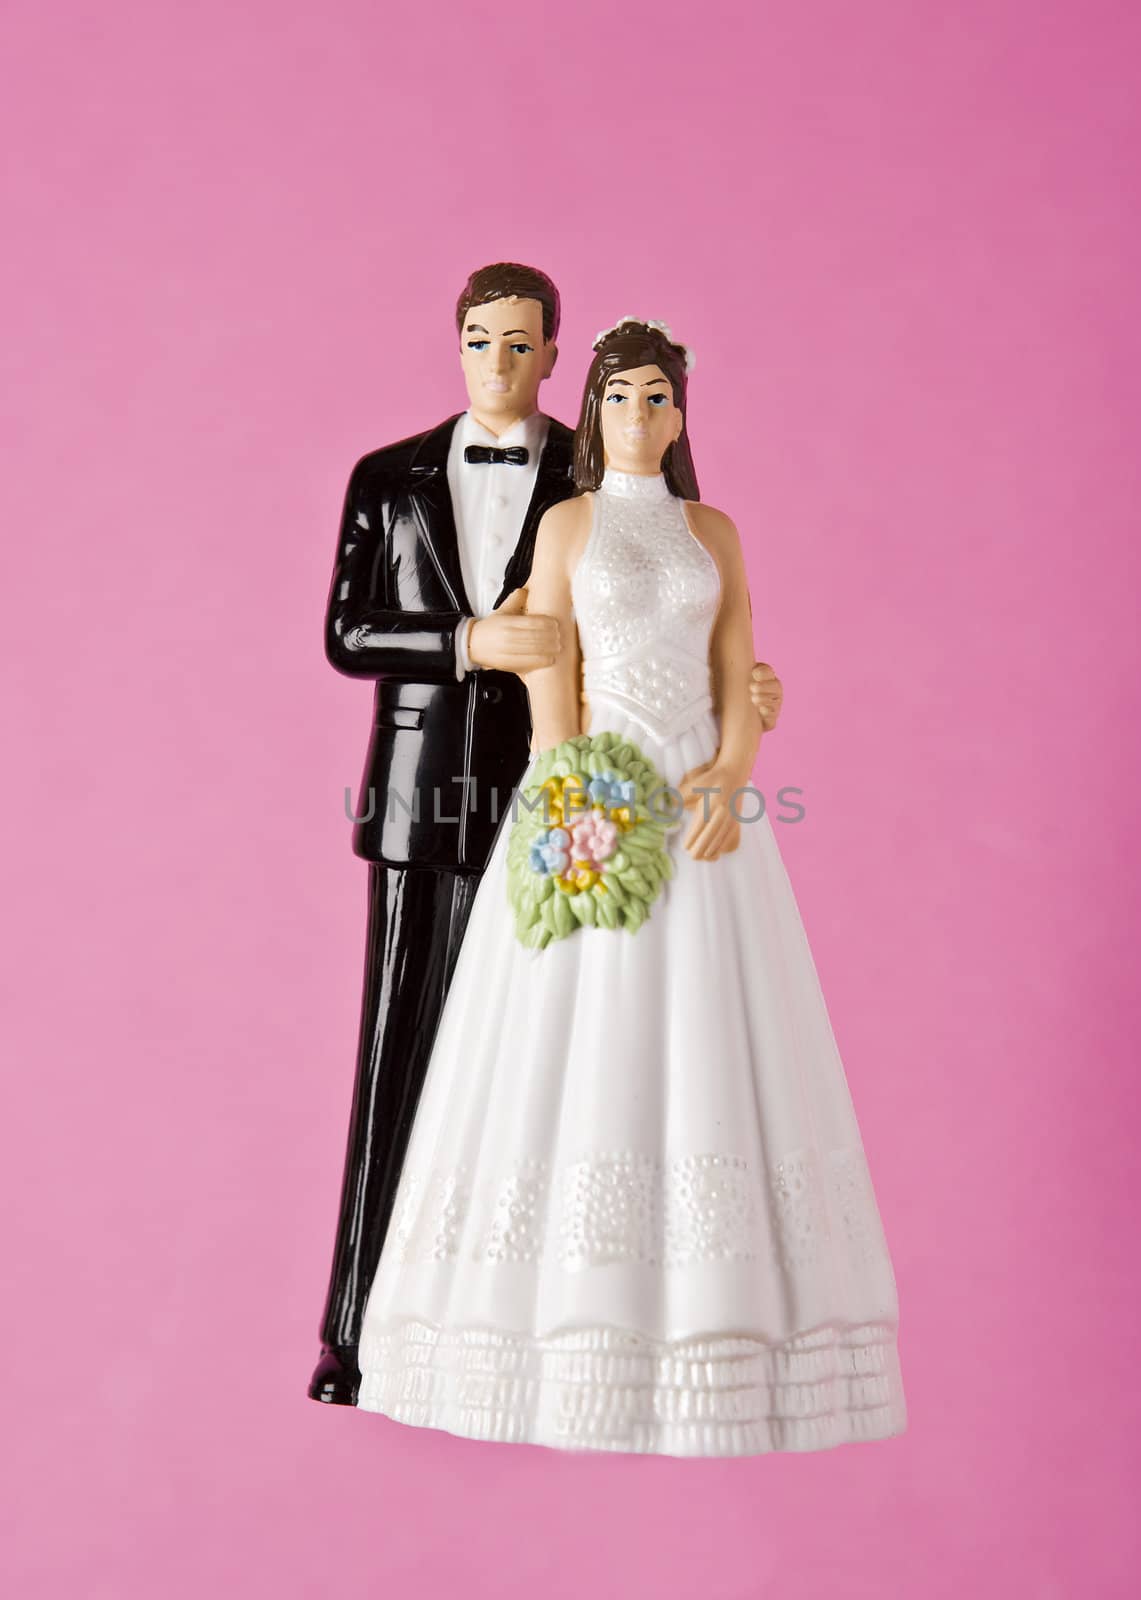 Wedding Figurine by gemenacom